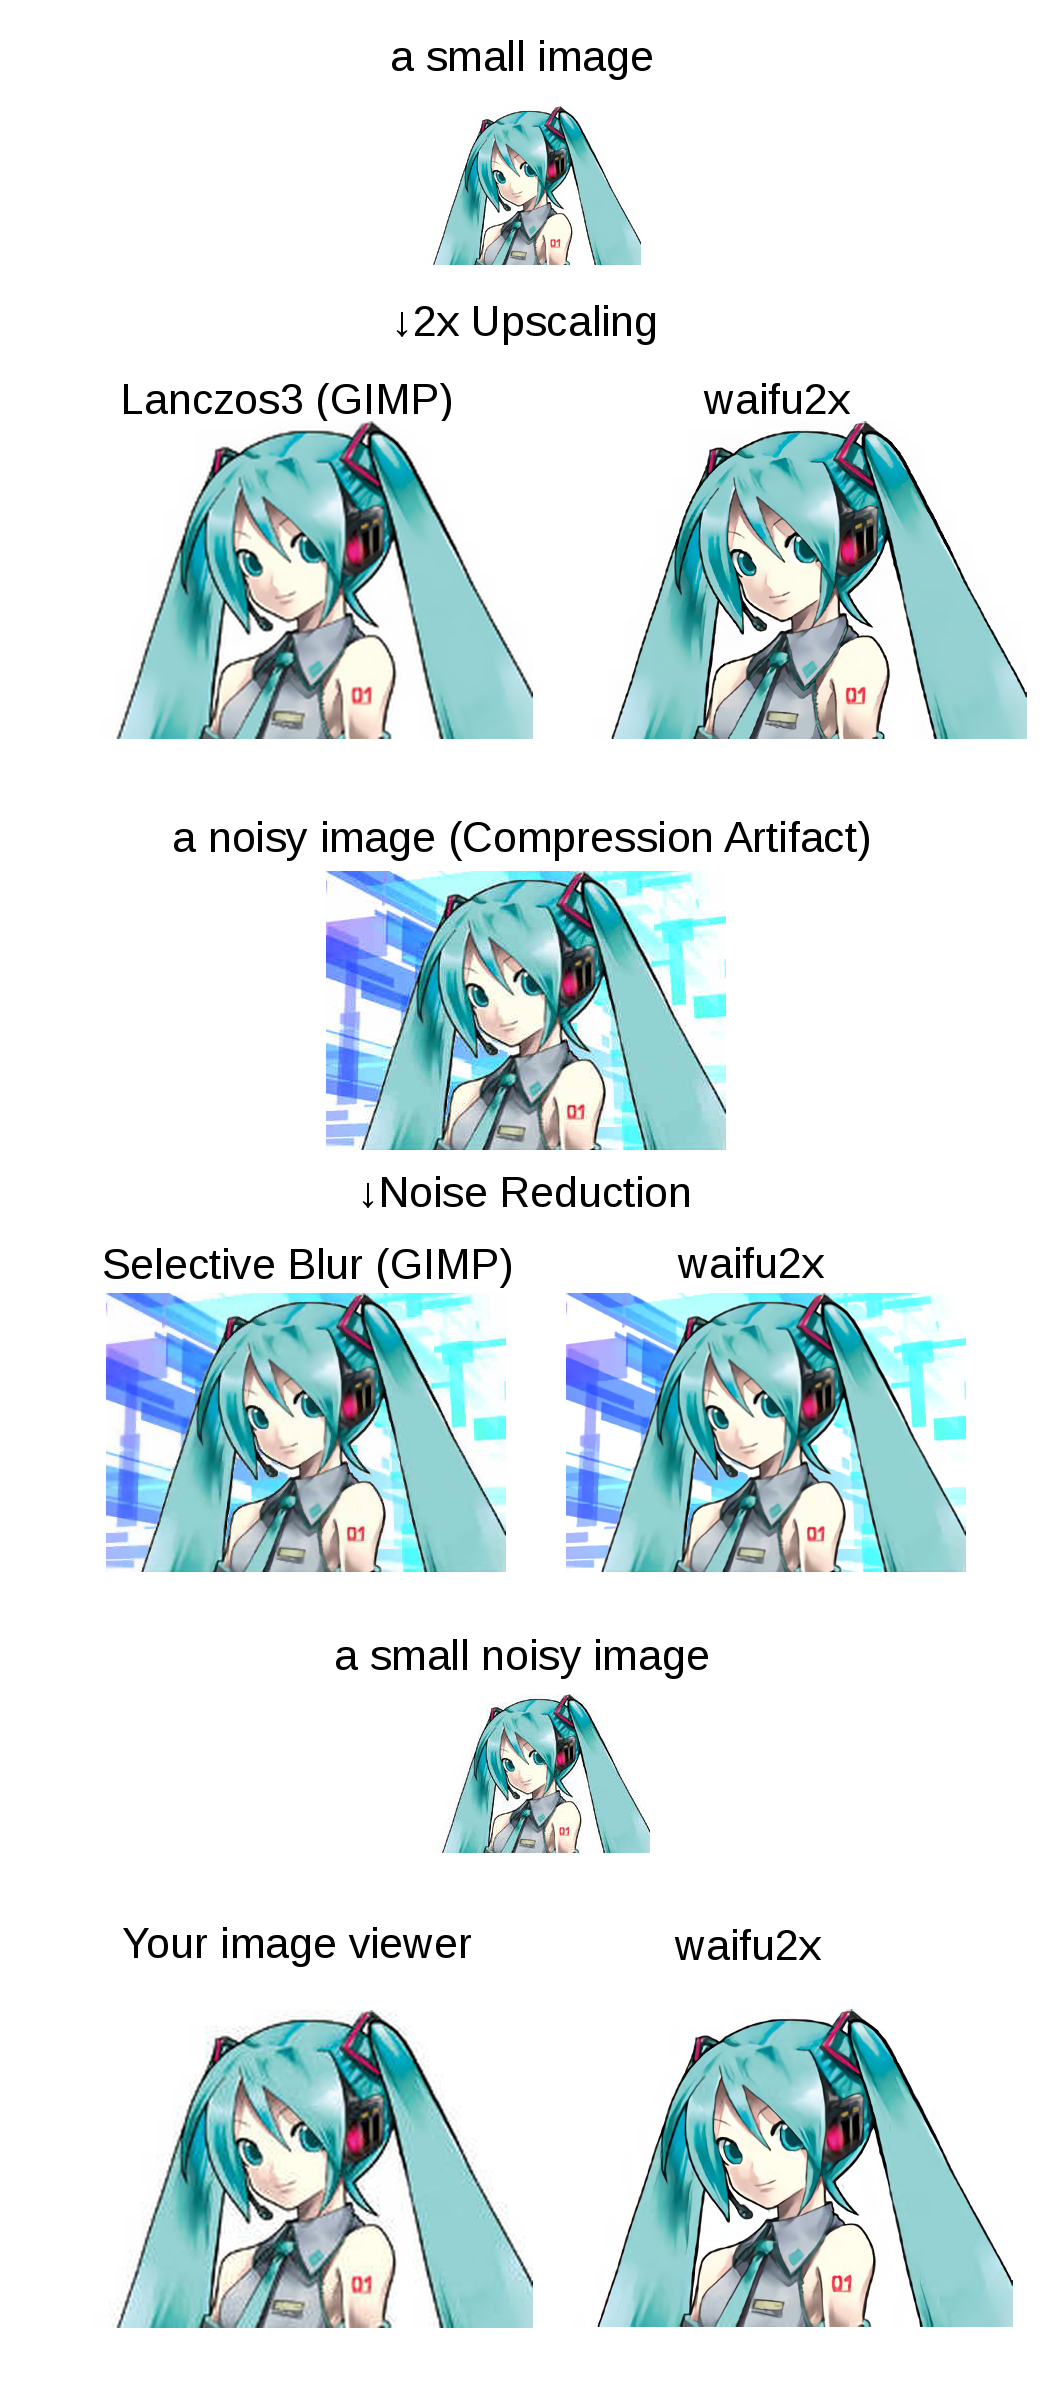 2D character picture (HatsuneMiku) is licensed under CC BY-NC by piapro [piapro](http://piapro.net/en_for_creators.html)